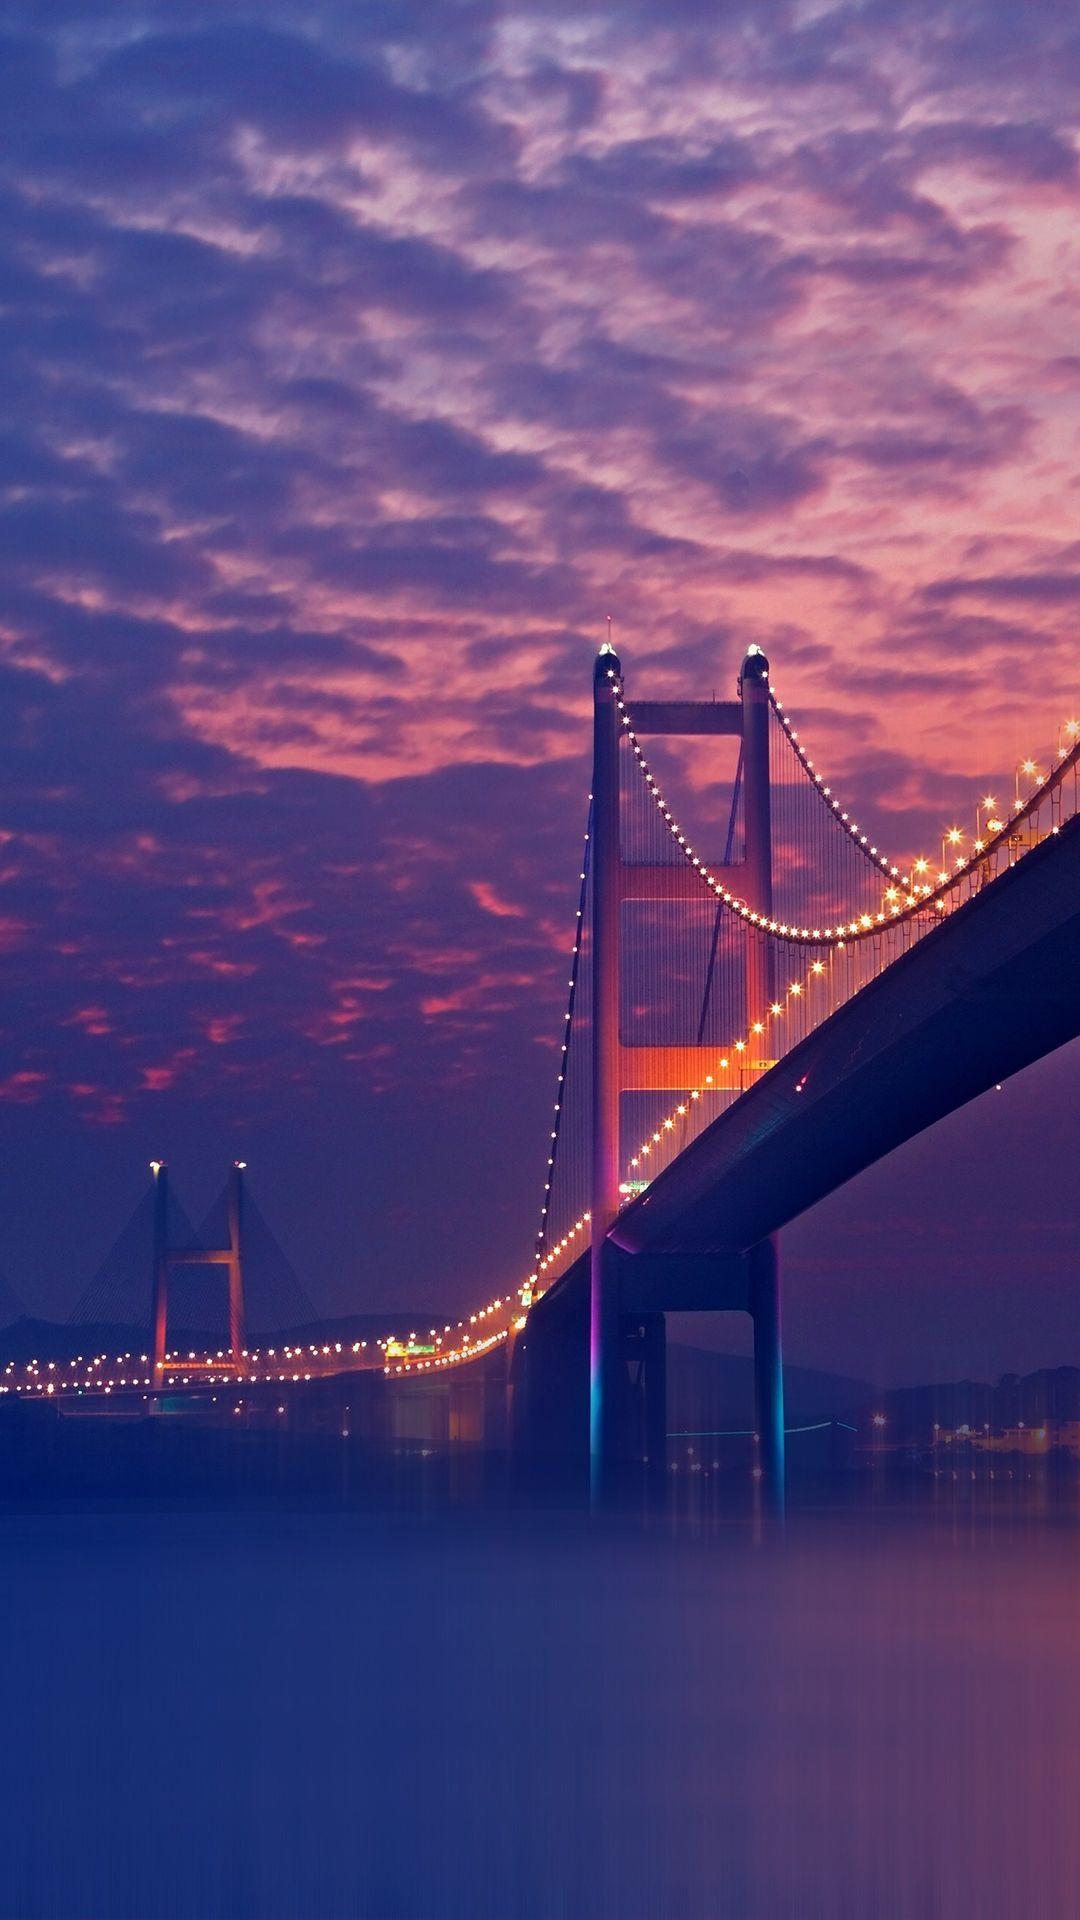 Bosporus Bridge in Turkey Country 4K Wallpaper | HD Wallpapers